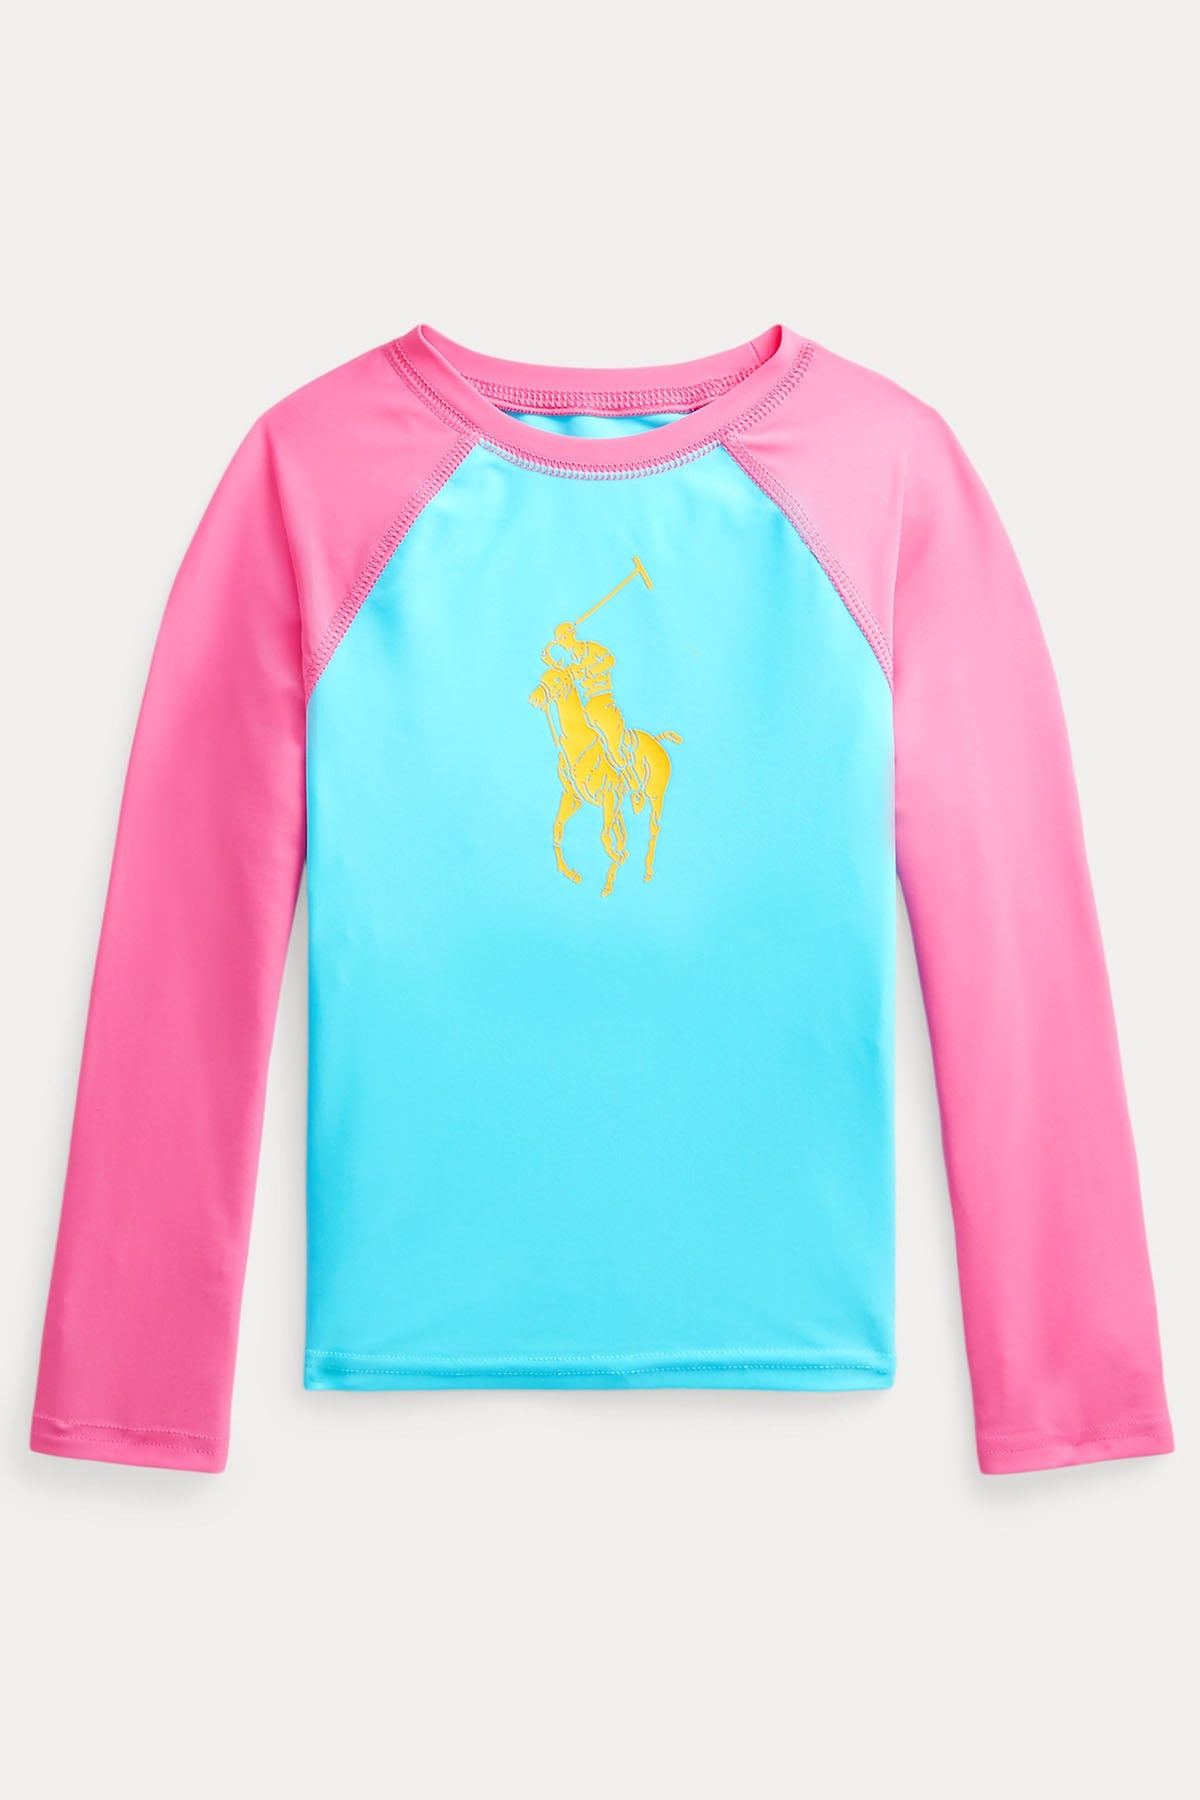 Polo Ralph Lauren Kids 2-3 Yaş Kız Çocuk Yuvarlak Yaka Likra T-shirt